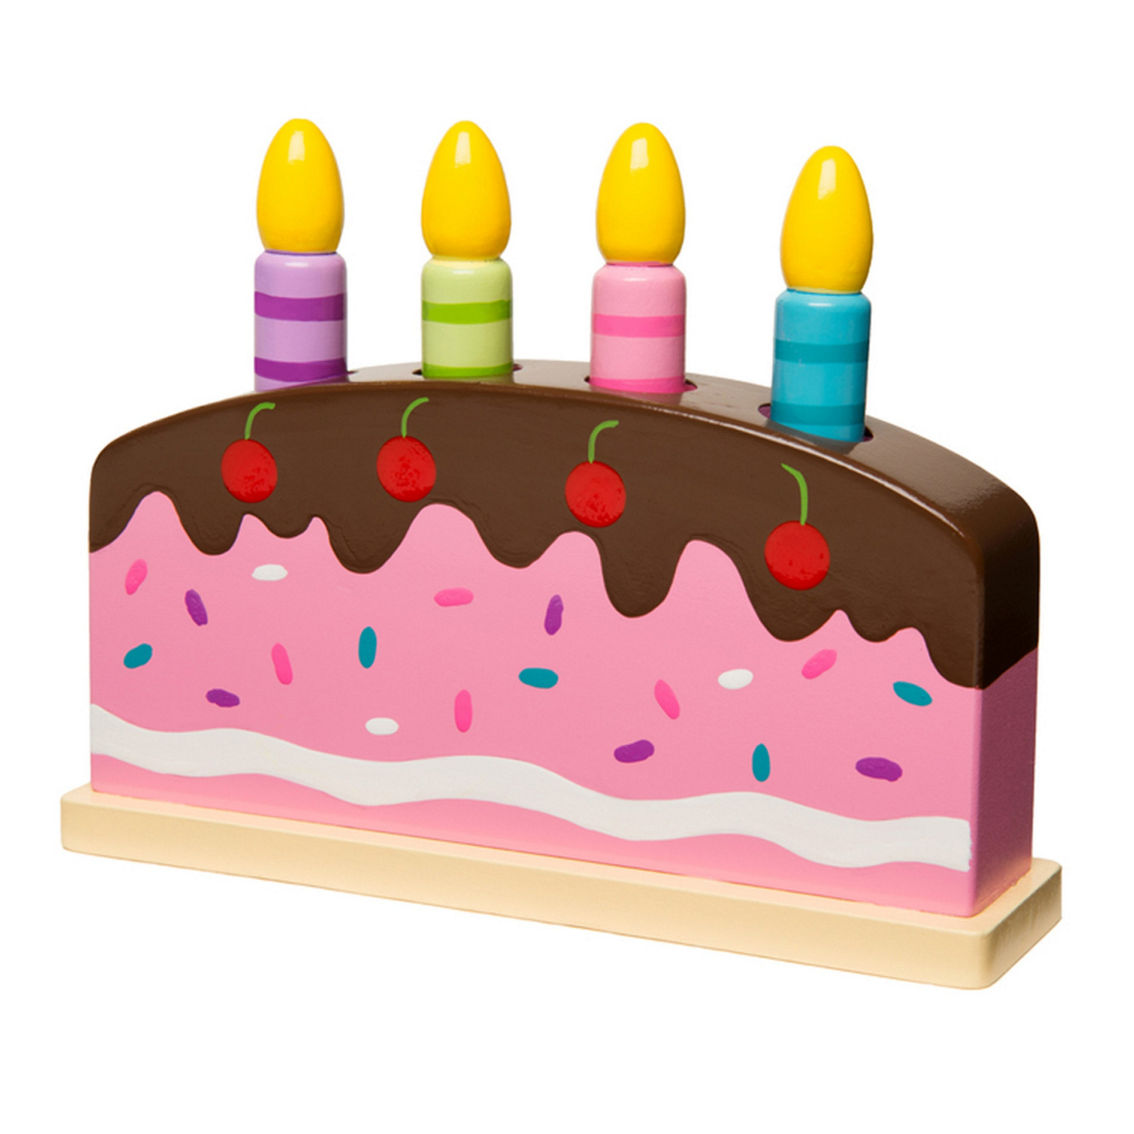 The Original Toy Company Pop Up Birthday Cake - Image 2 of 3